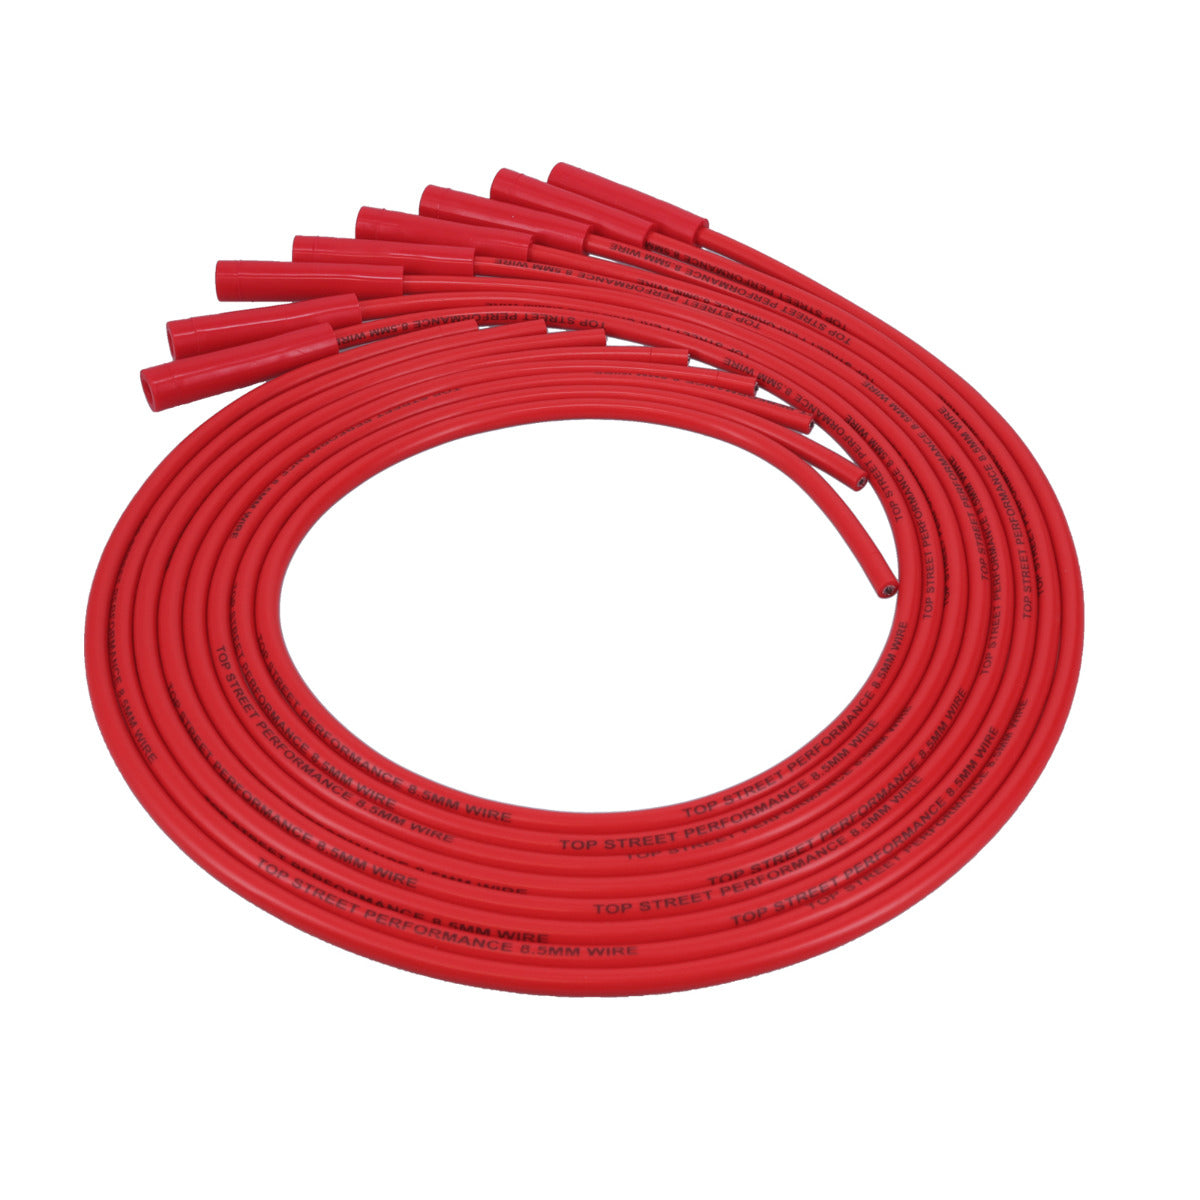 Top Street Performance 81225 8.5mm Universal LS/Lt Spark Plug Spark Plug Wire Set with 180° Plug Boots, Red